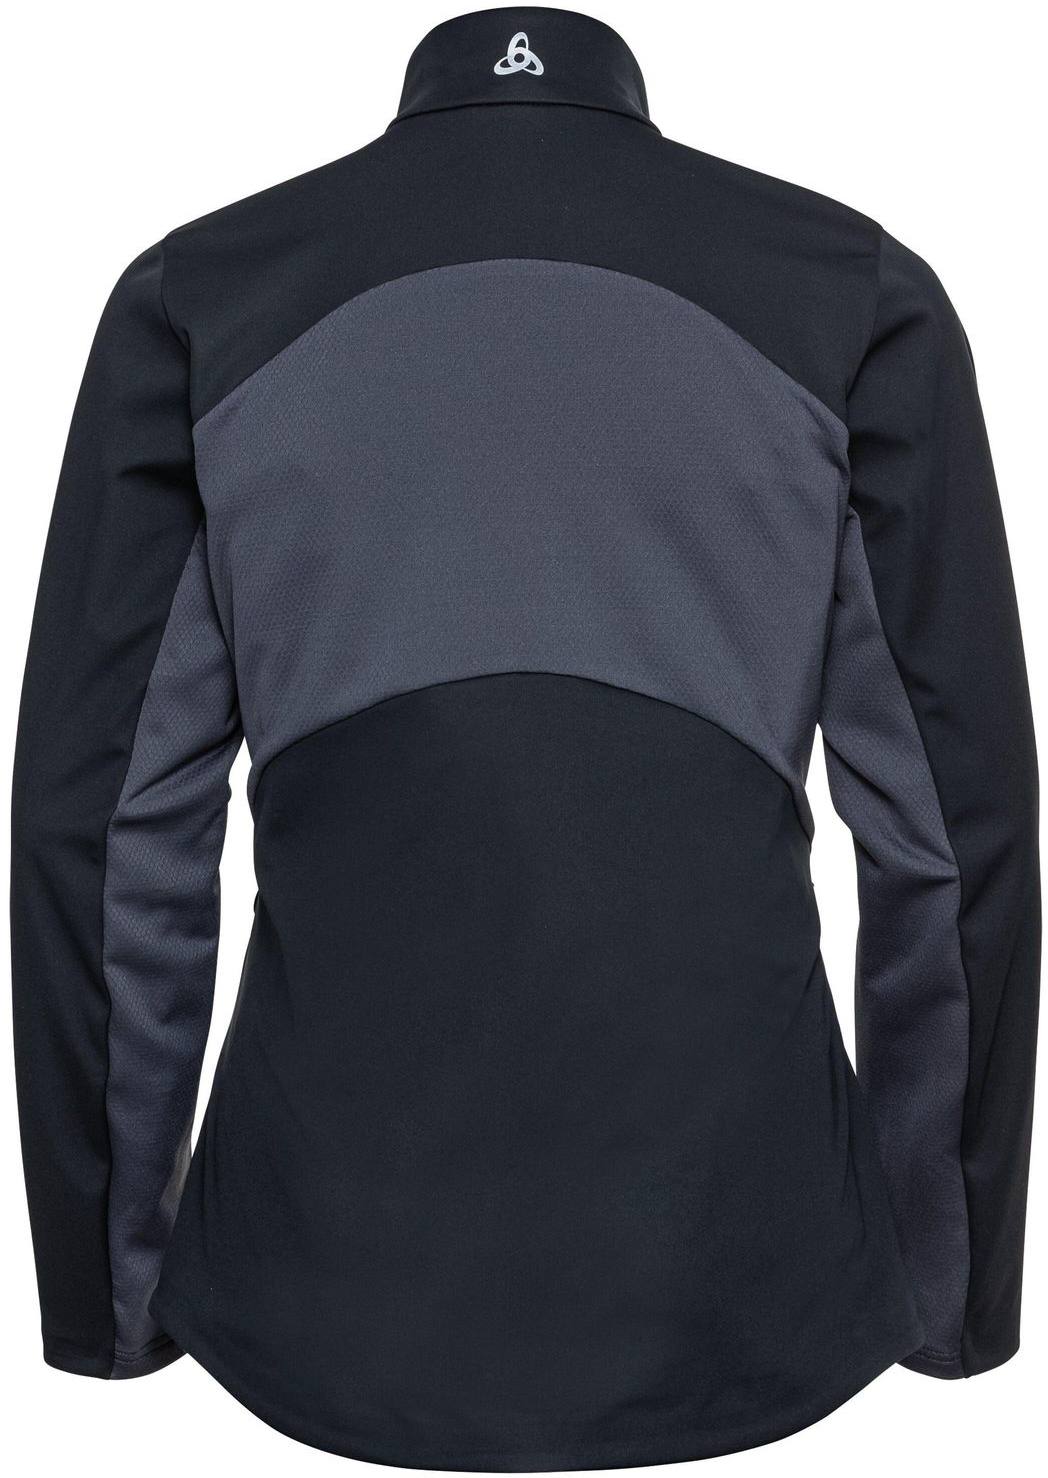 Odlo Women’s Markenes Jacket Saphir XL